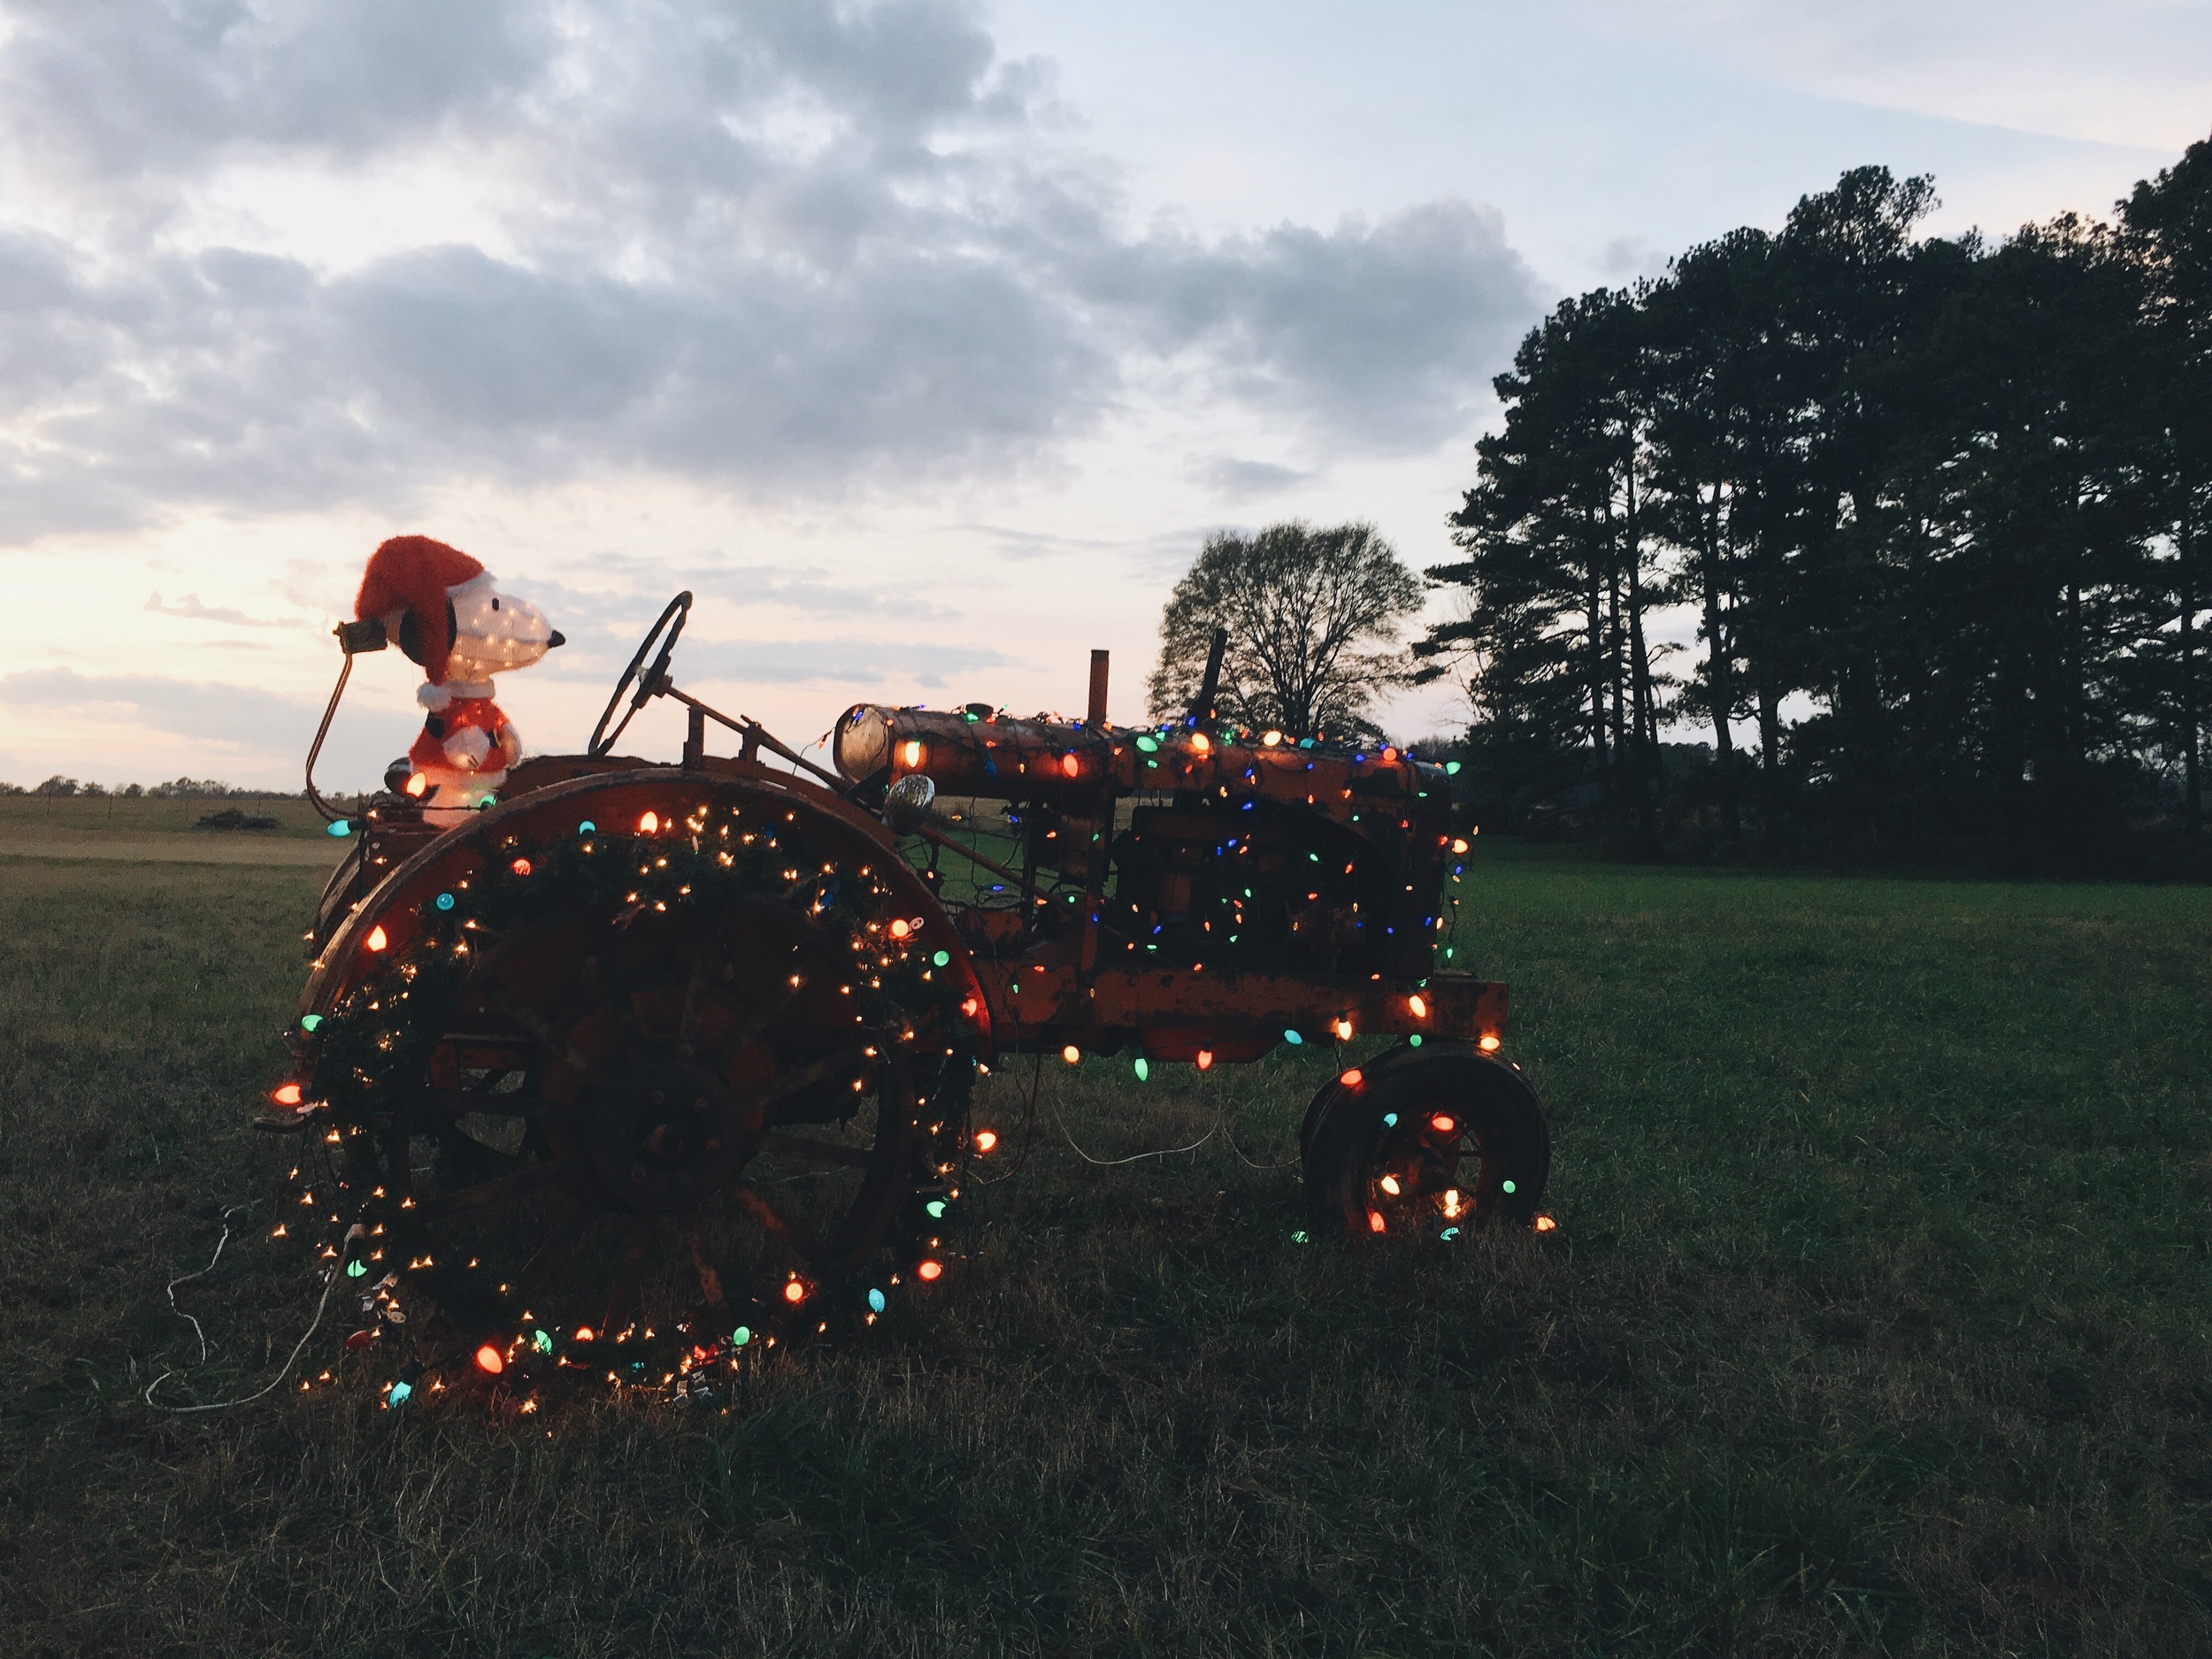   "Southern Christmas"&nbsp; ft. Snoopy  Brooks, Georgia ||&nbsp;December 2015 || iPhone 6s Plus 